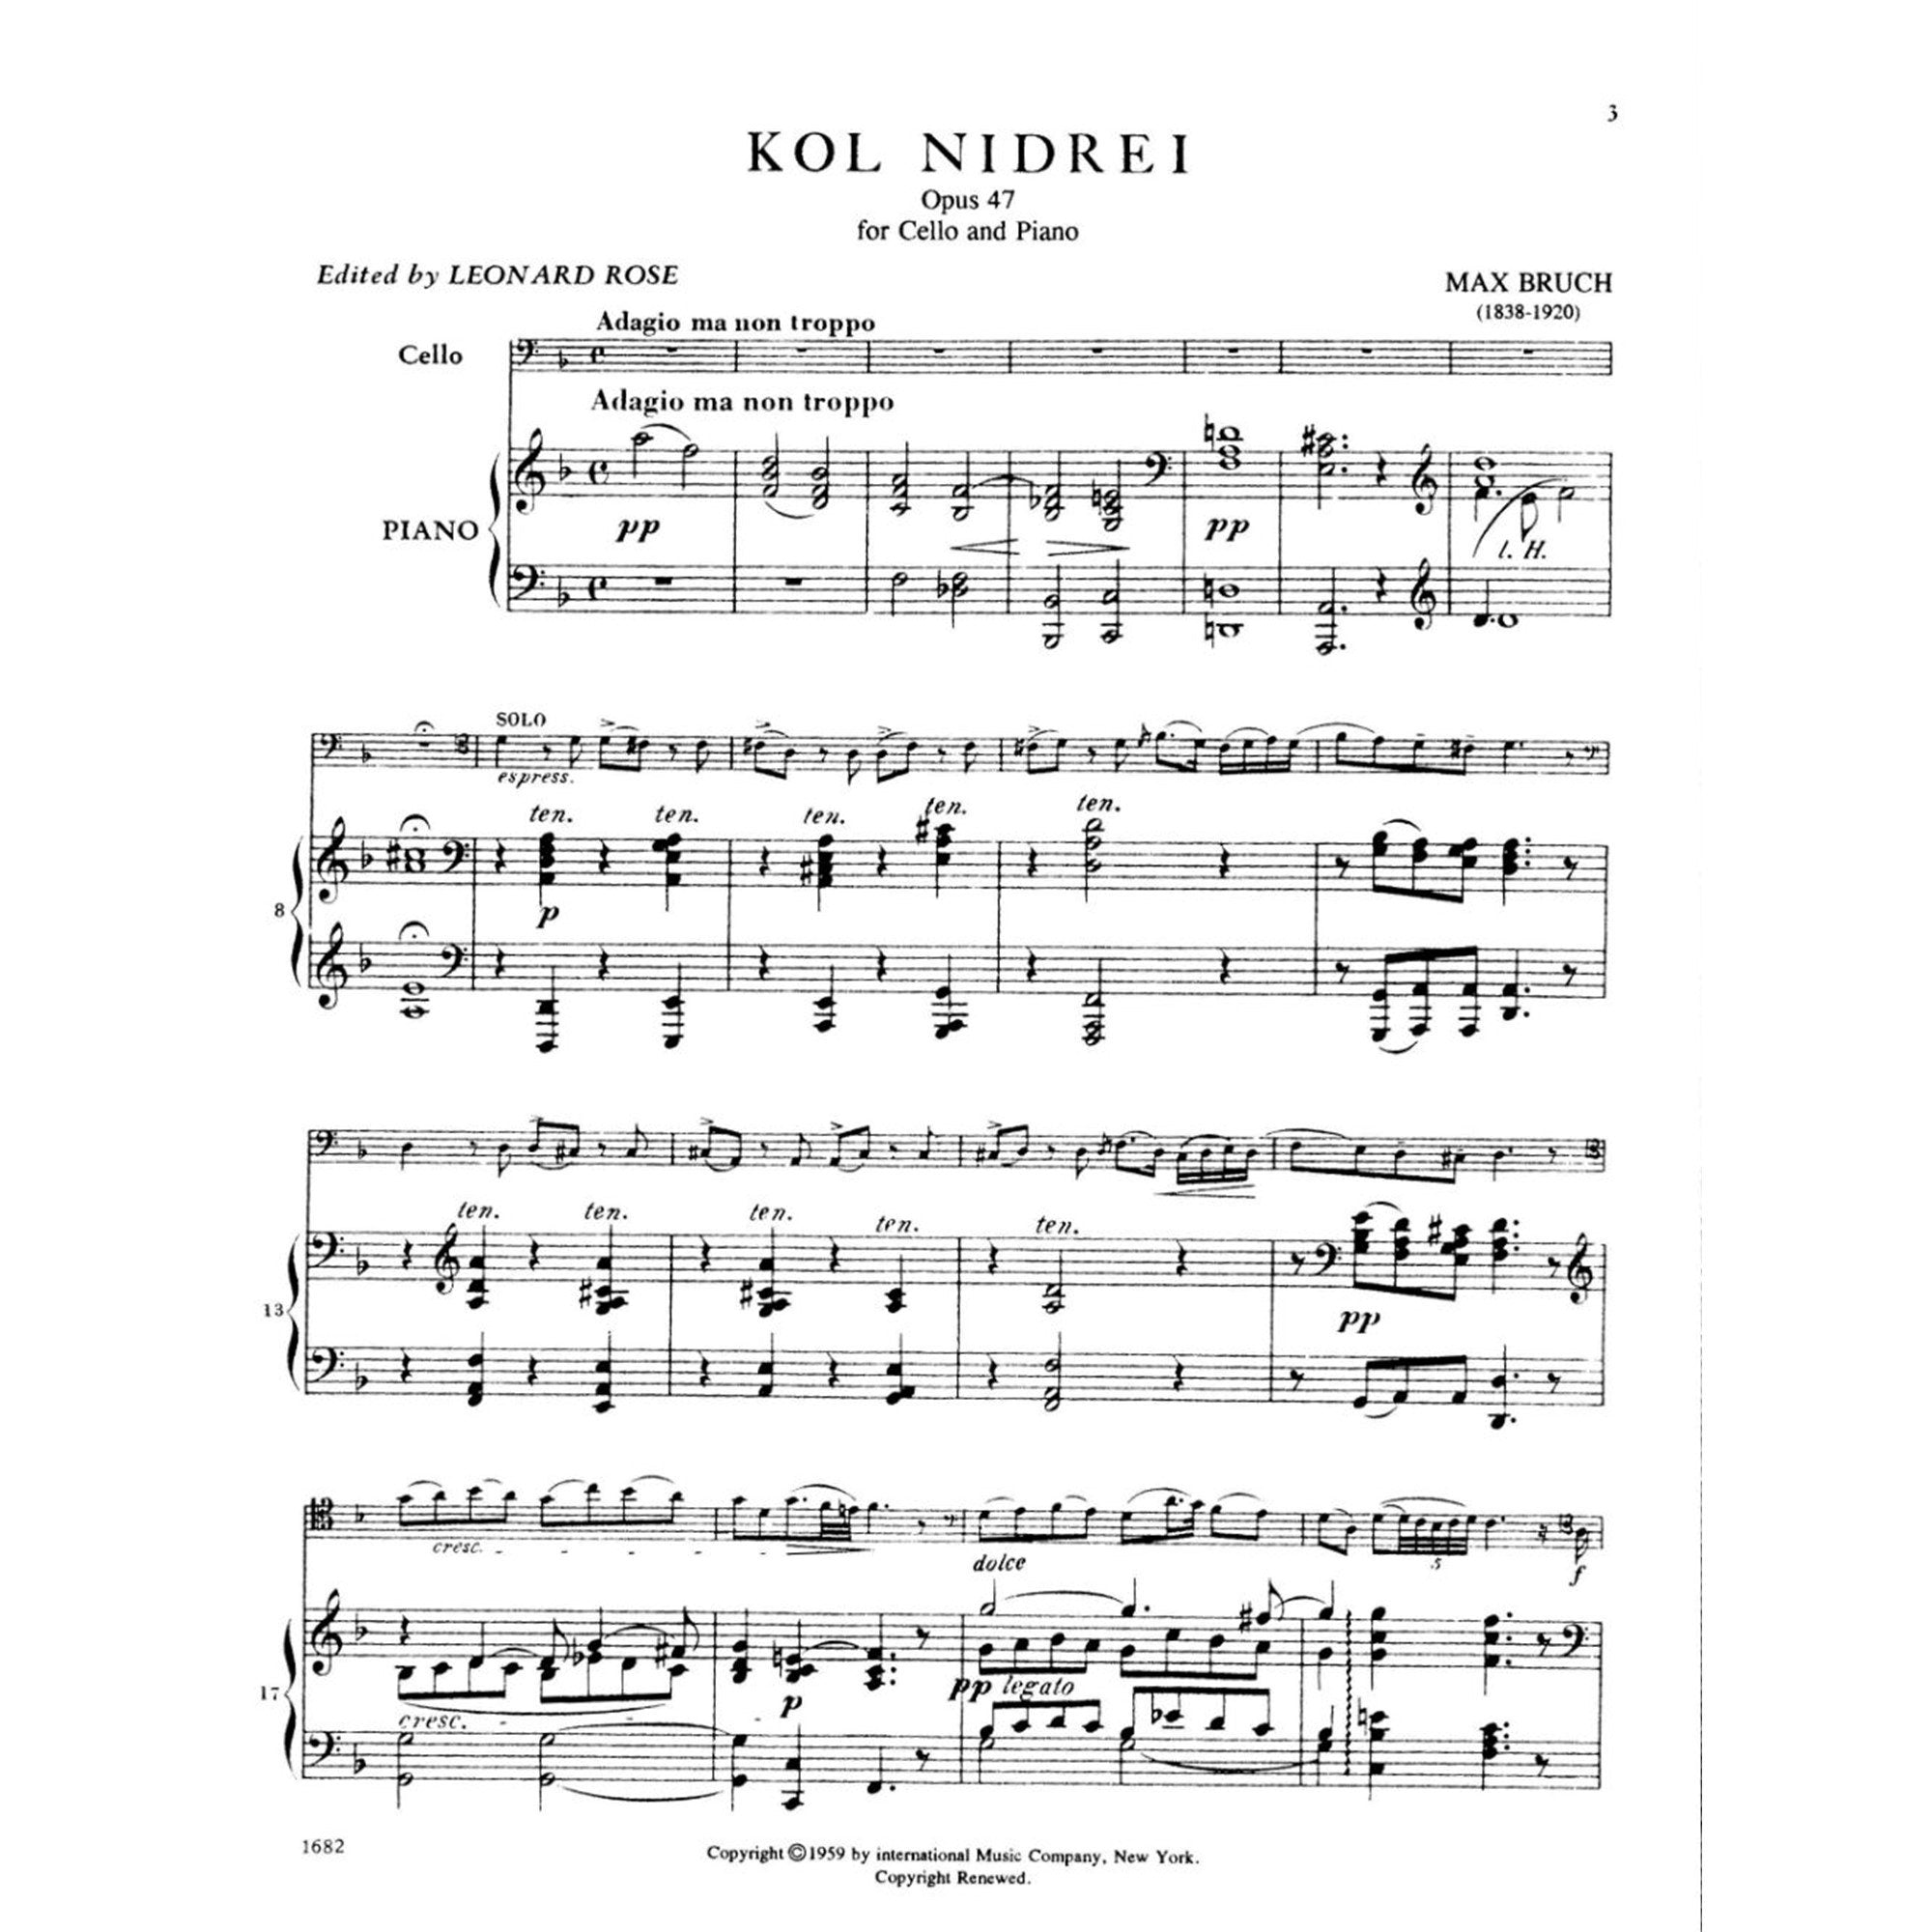 Bruch: Kol Nidrei Op 47 for Cello & Piano